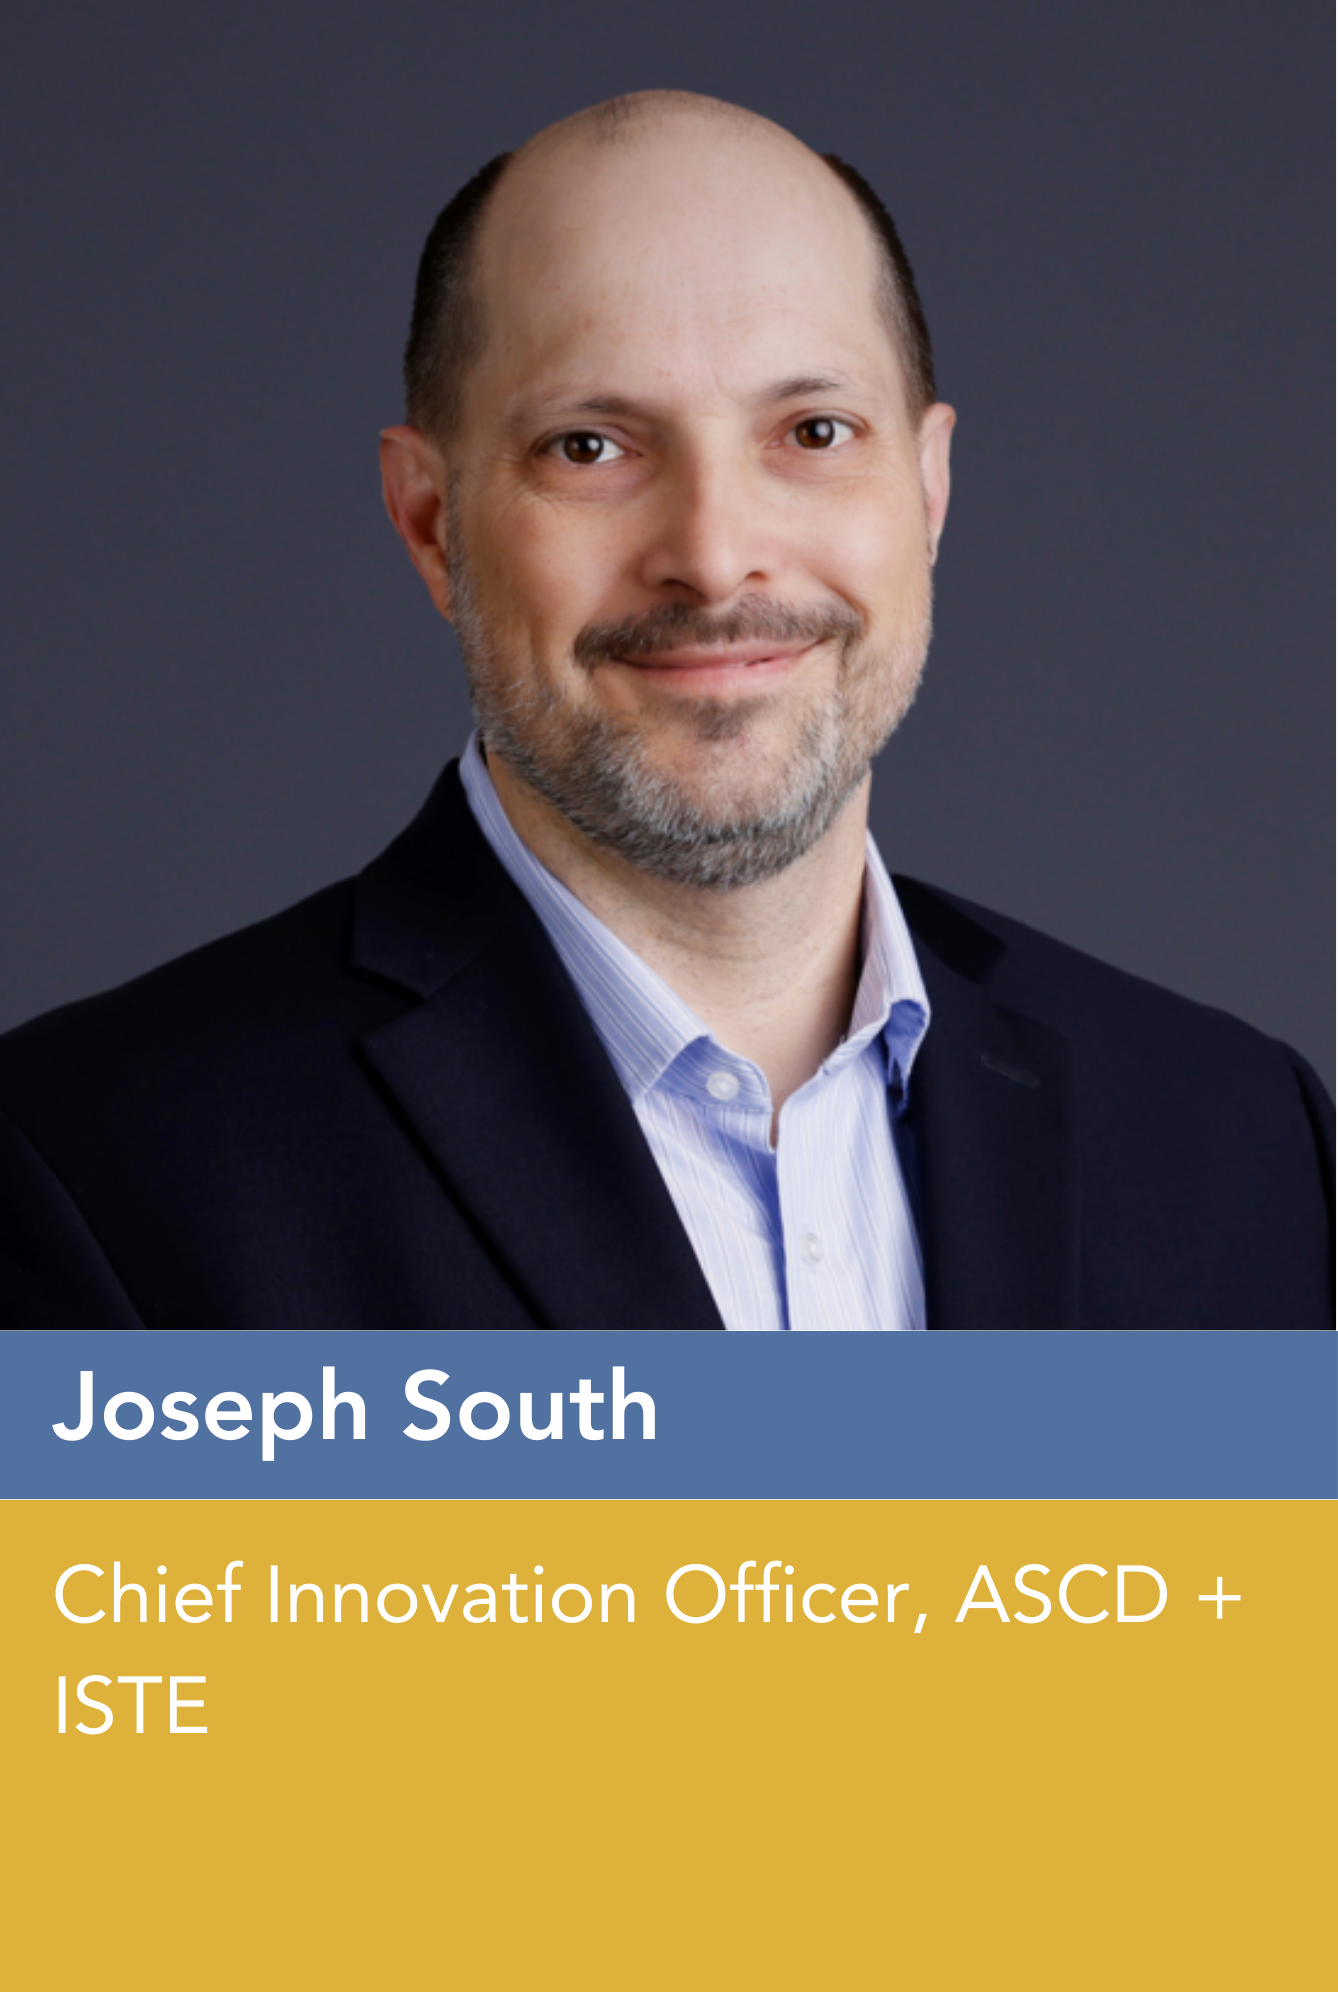 Joseph South